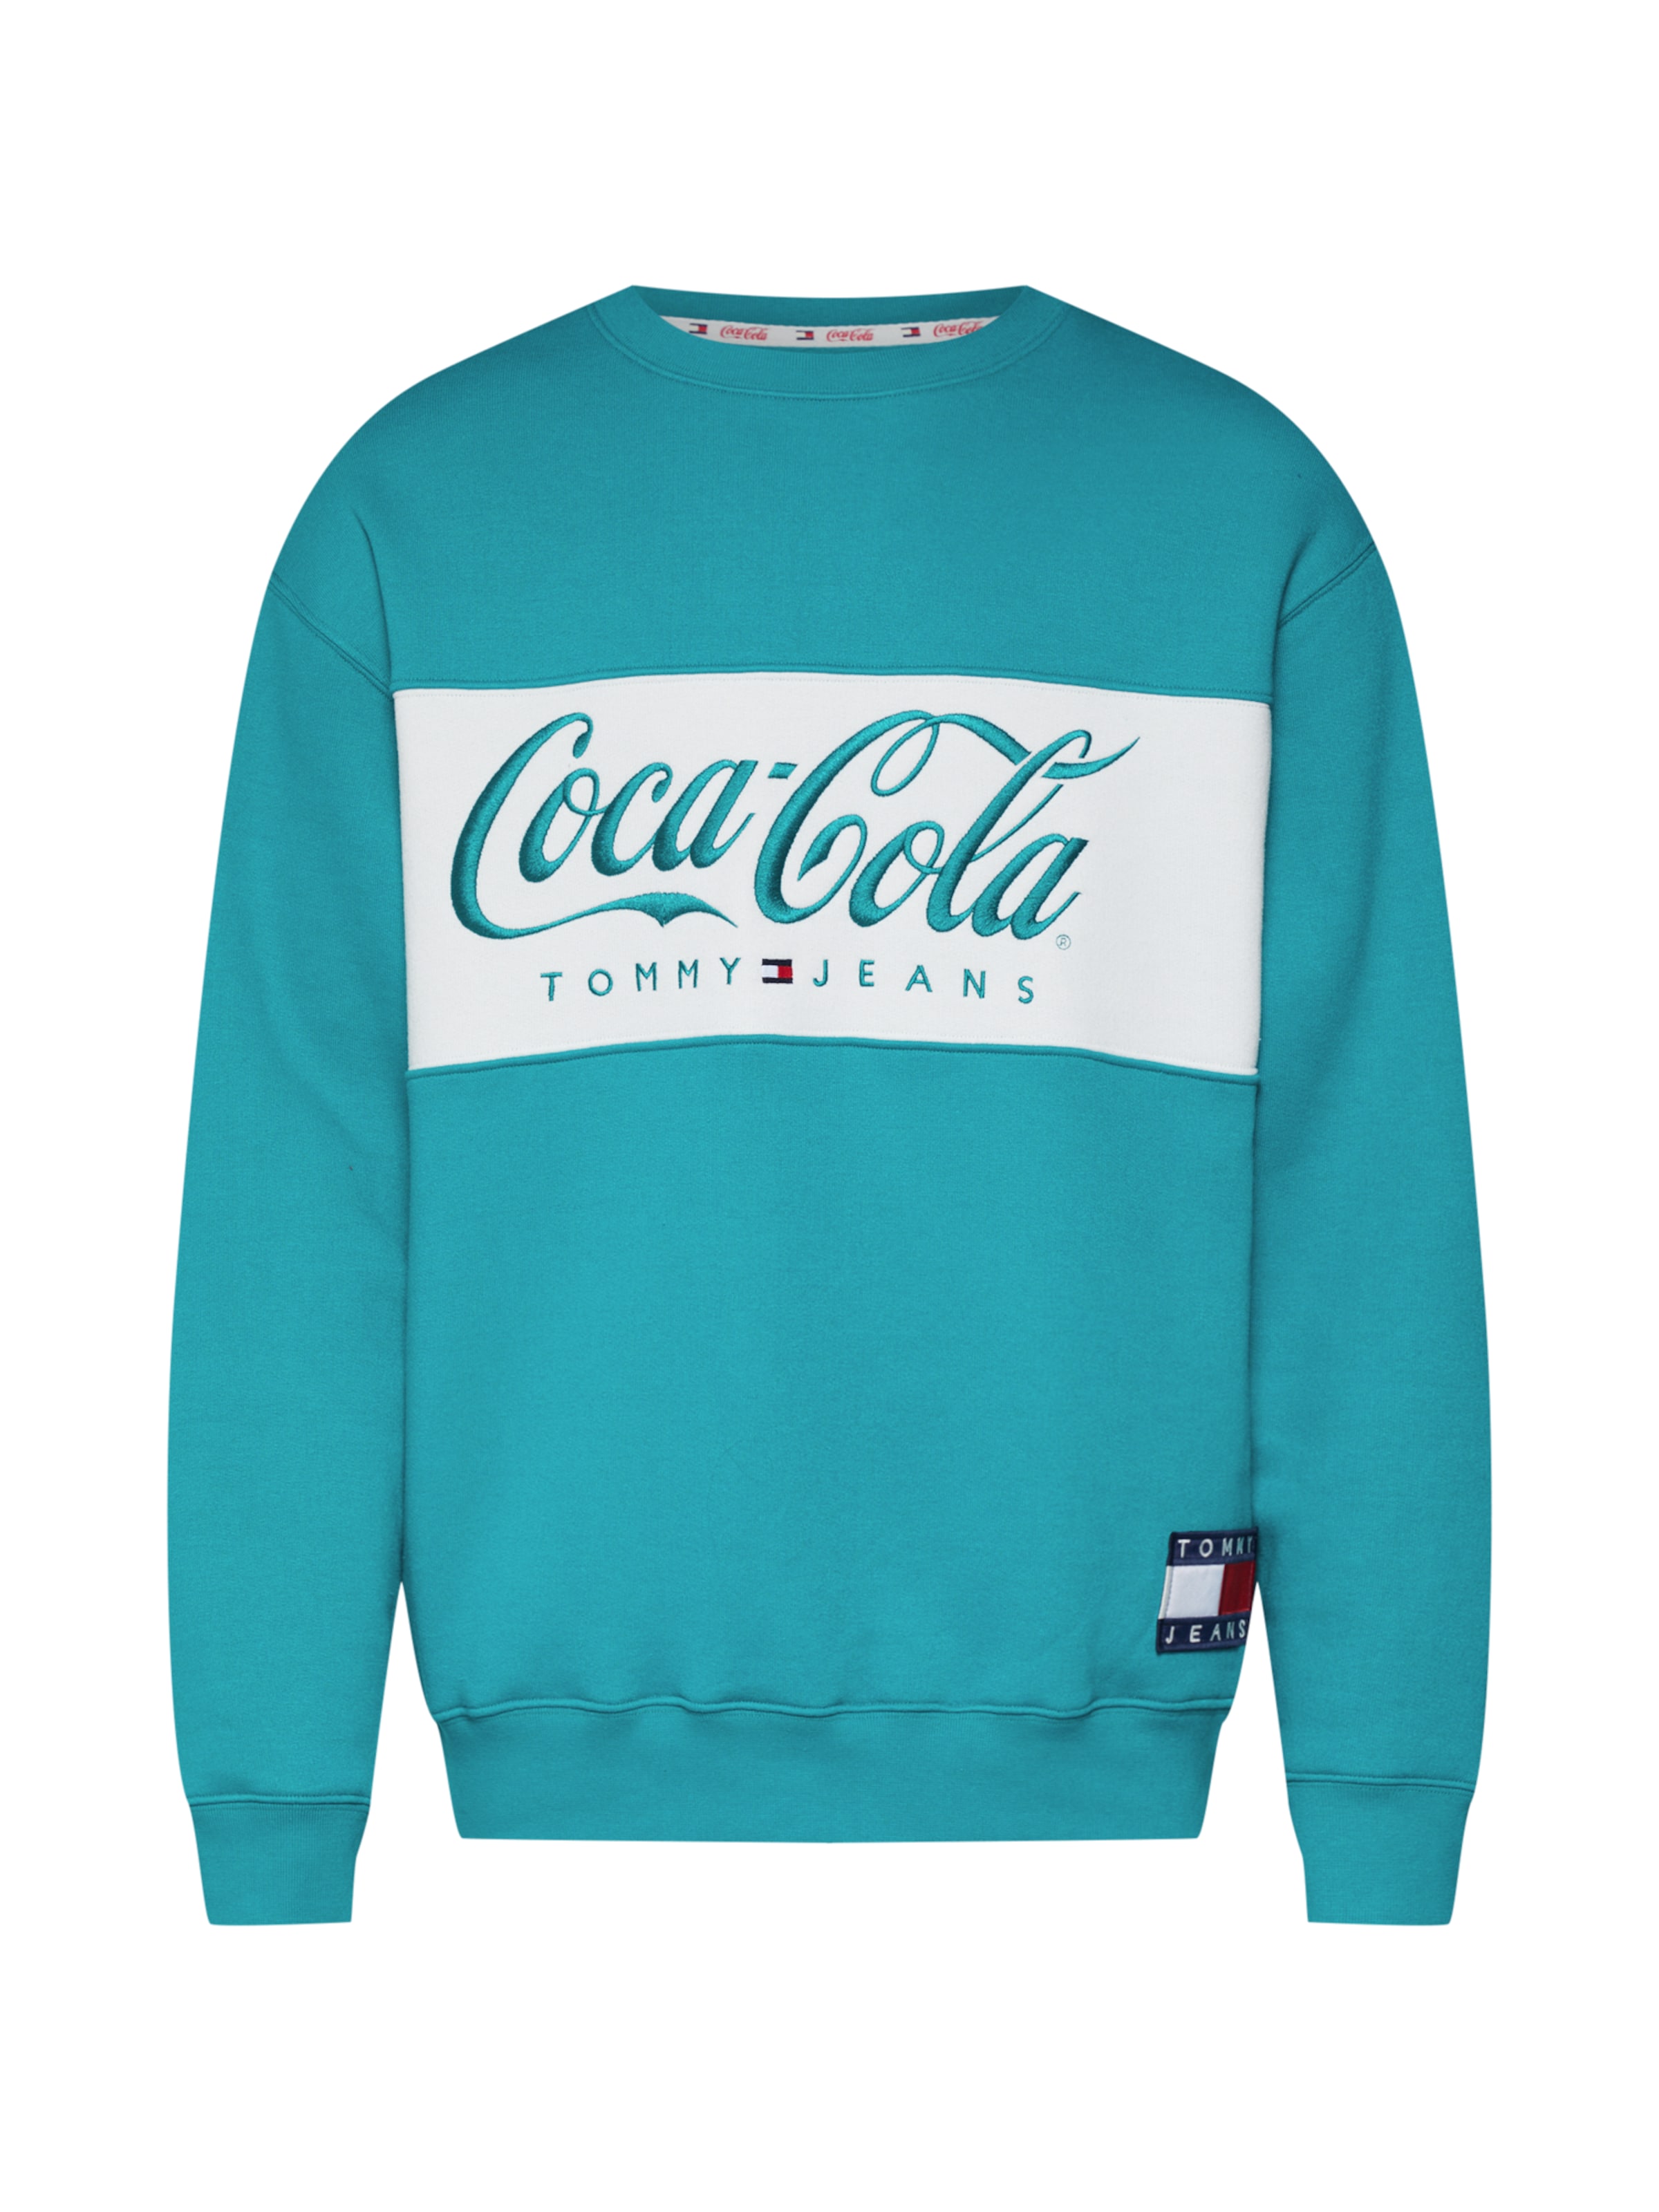 tommy jeans coca cola hoodie